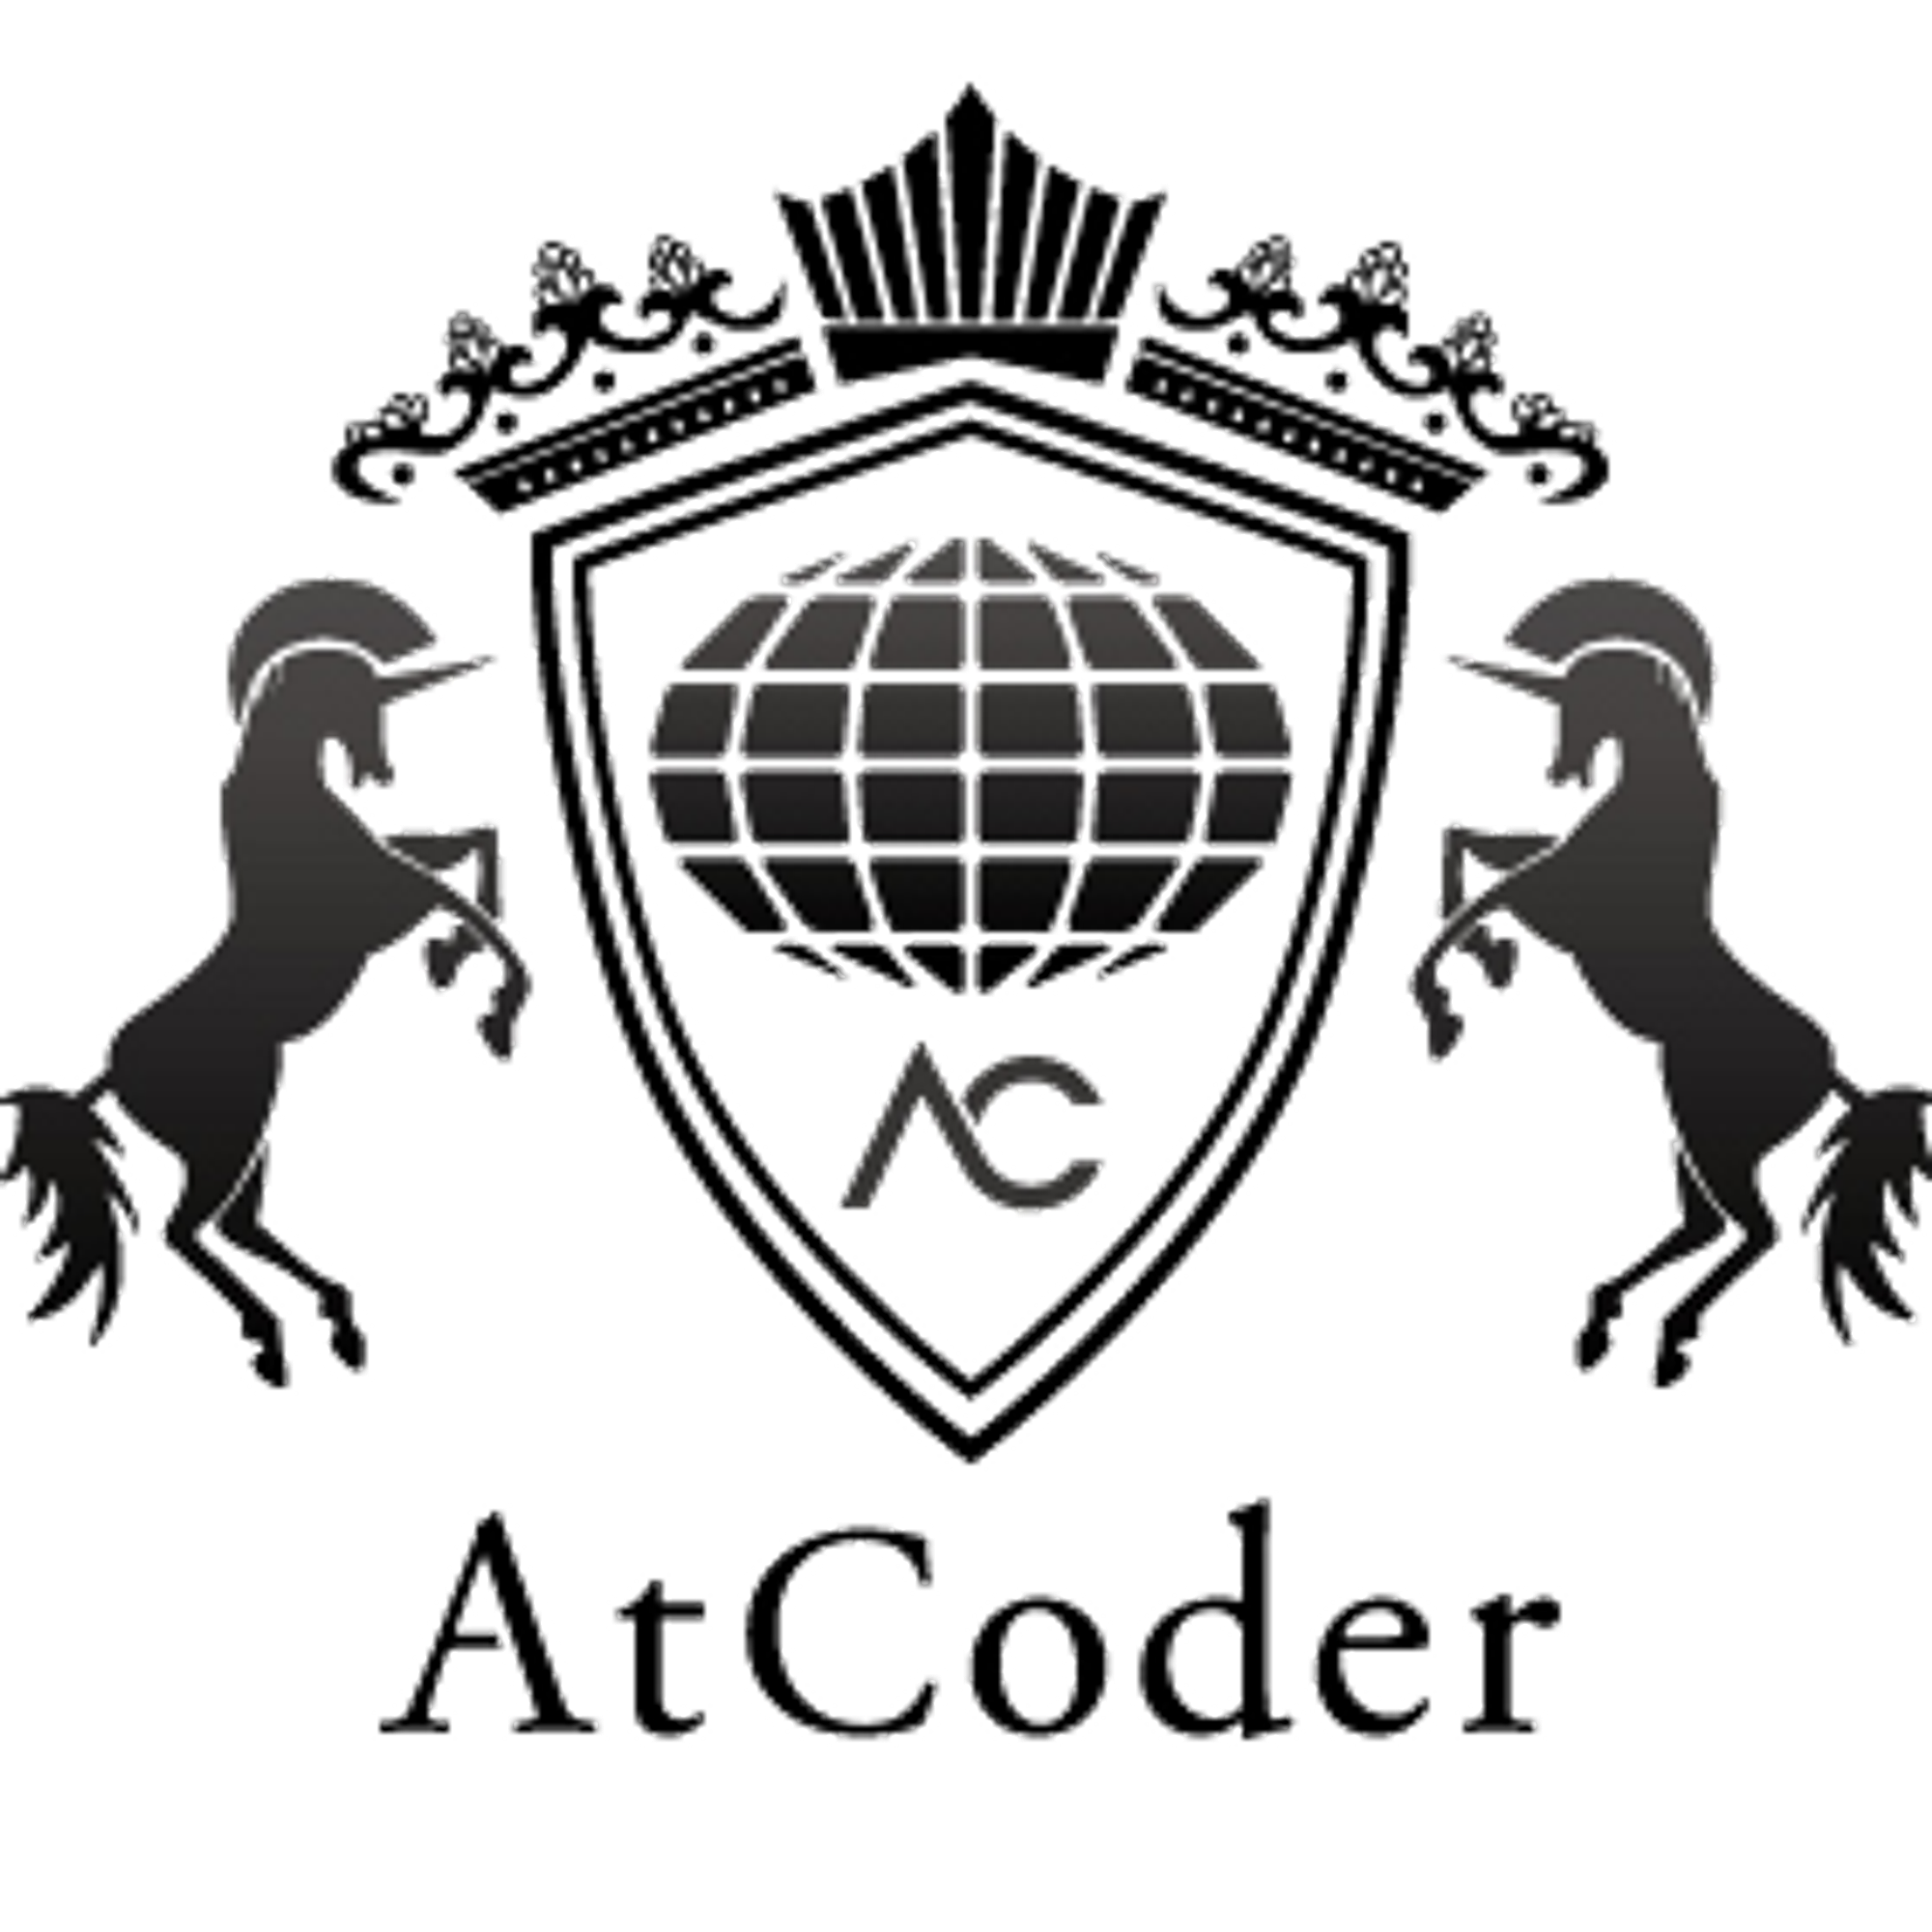 AtCoder：競技プログラミングコンテストを開催する国内最大のサイト